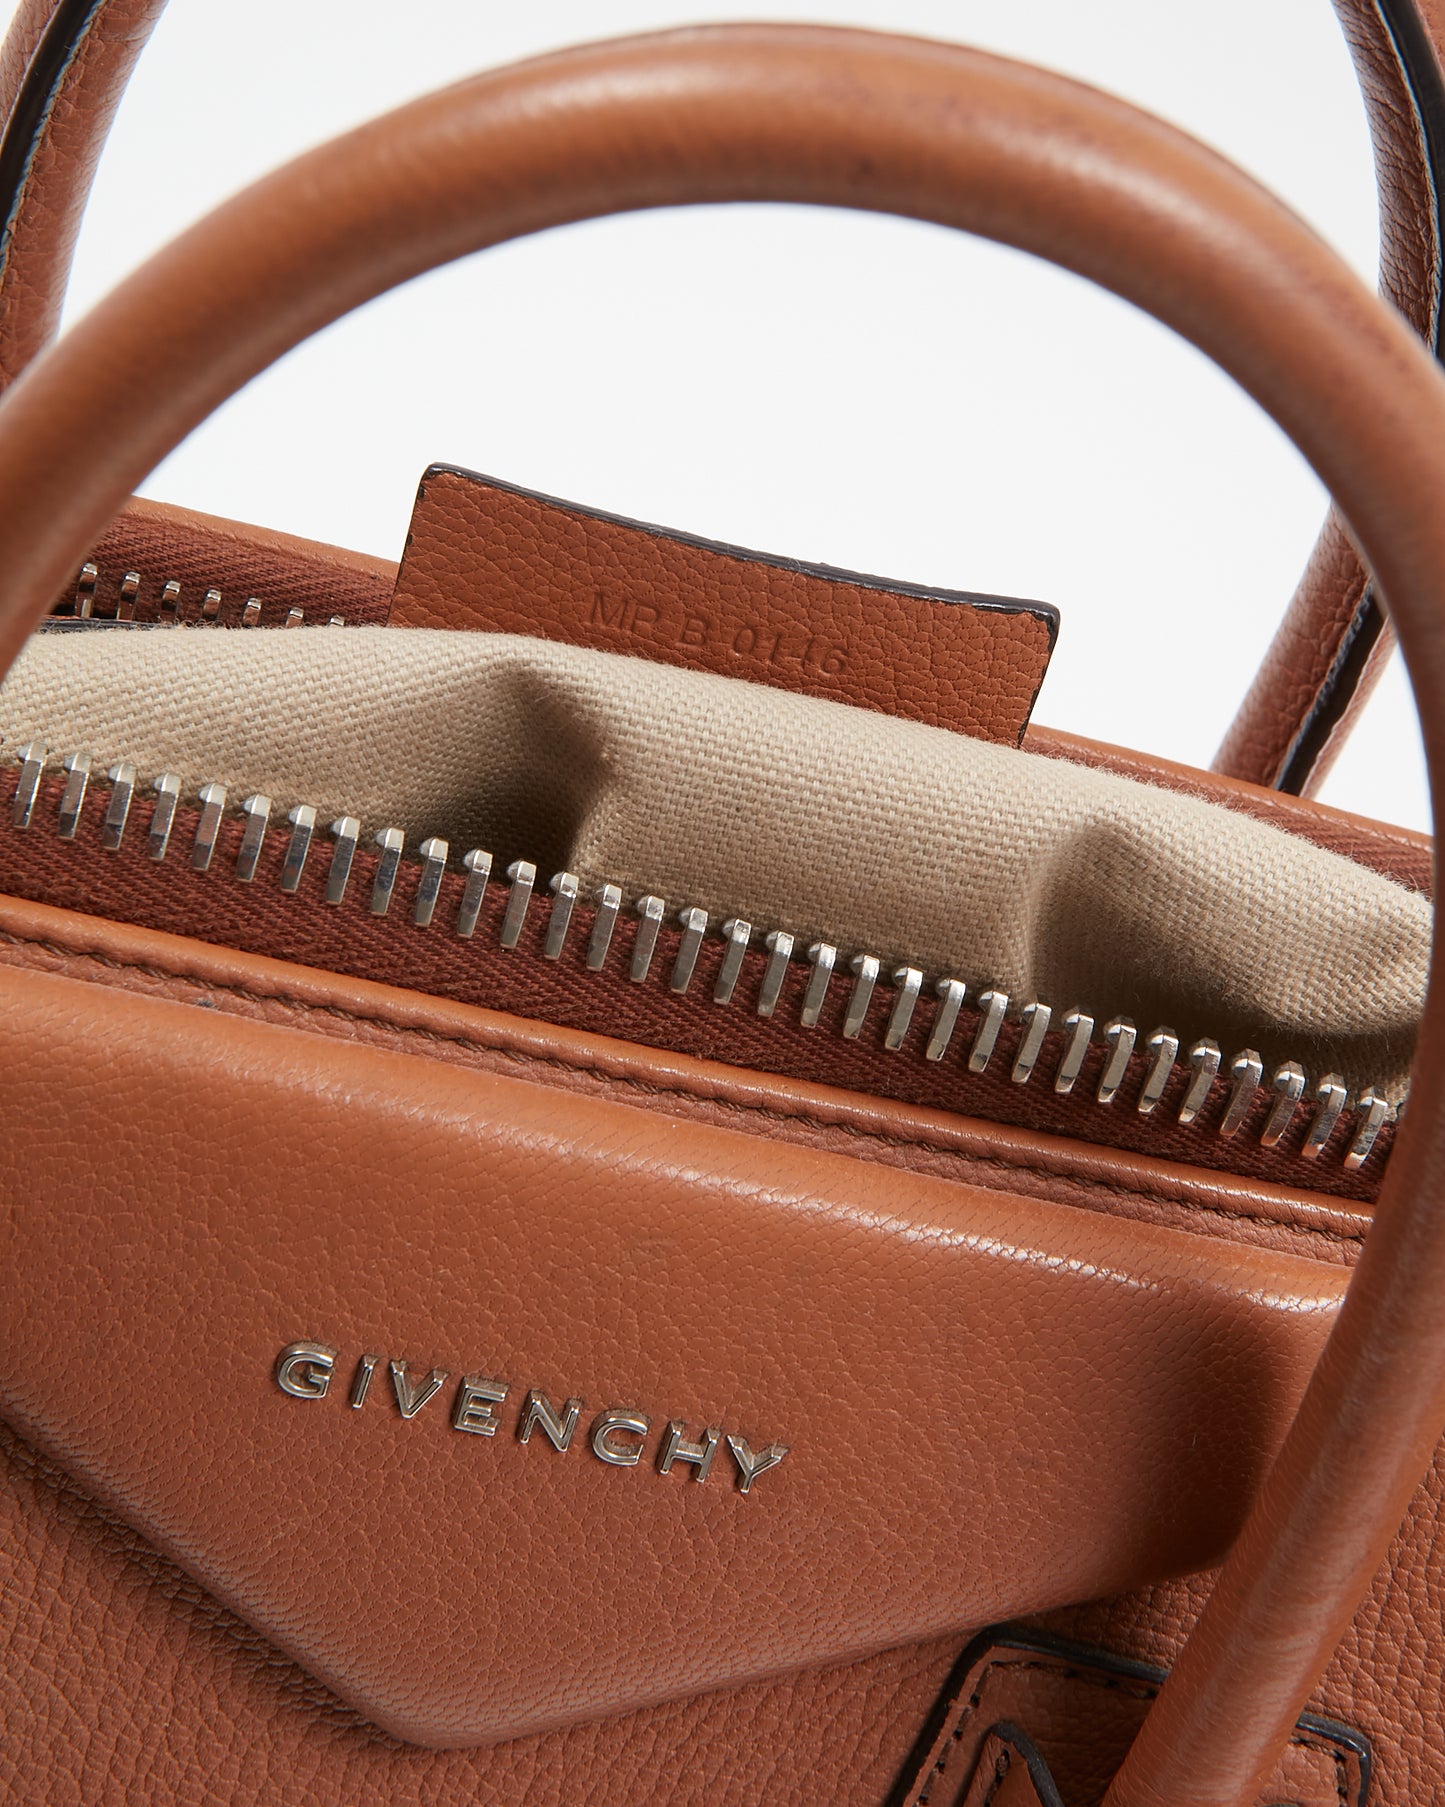 Givenchy Tan Grained Leather Medium Antigona Bag